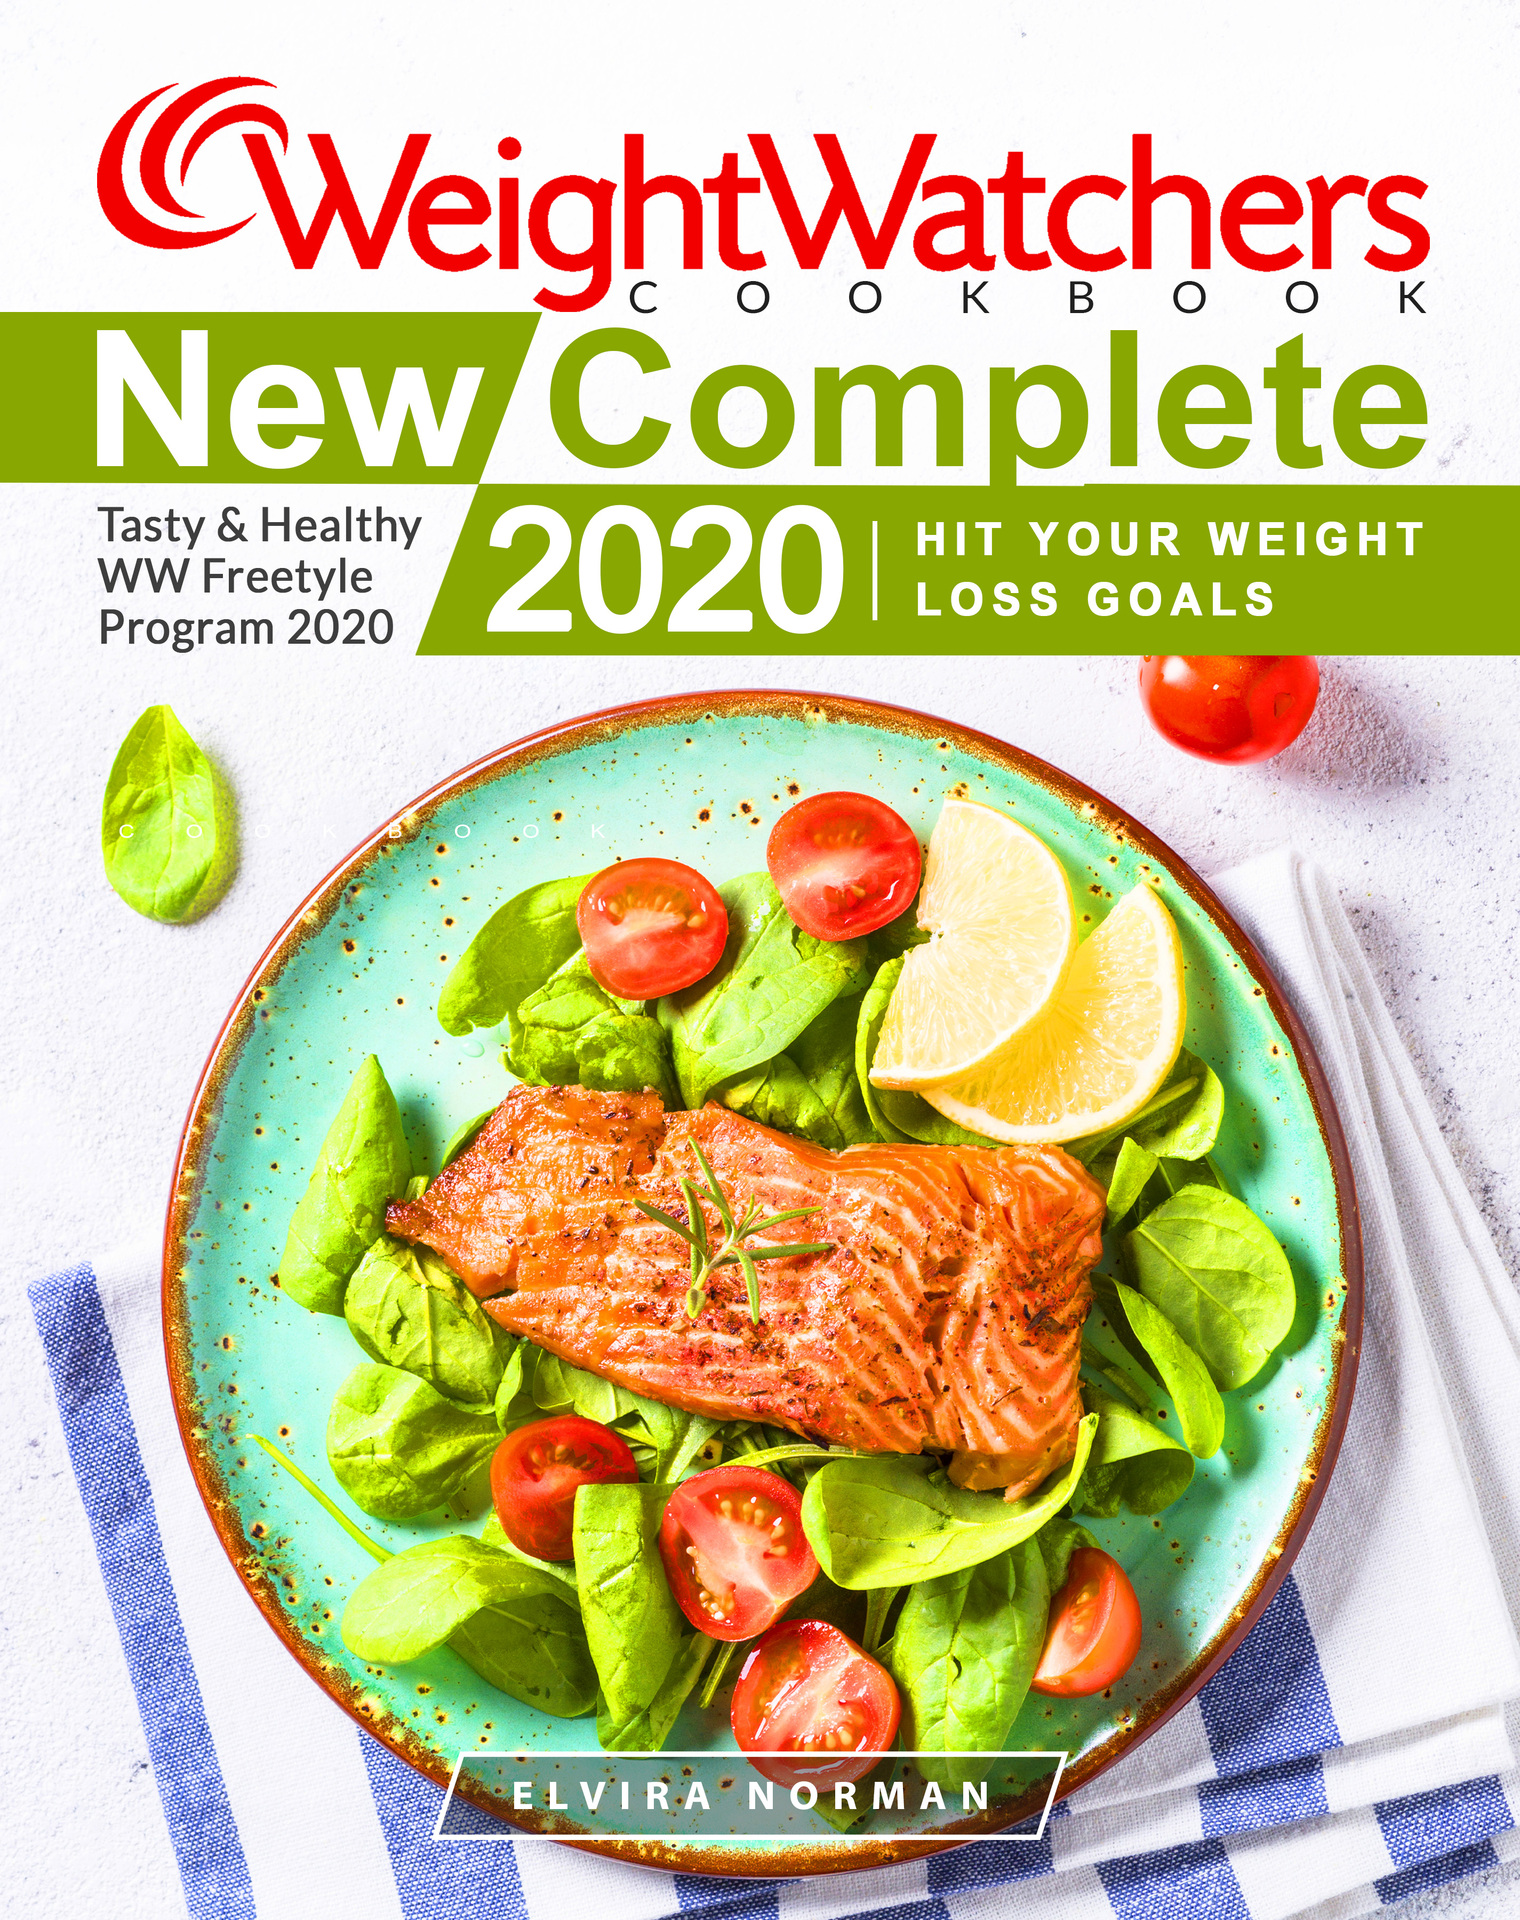 Weight Watchers New Complete Cookbook 2020 BY ELVIRA NORMAN Copyright 2020 - photo 1